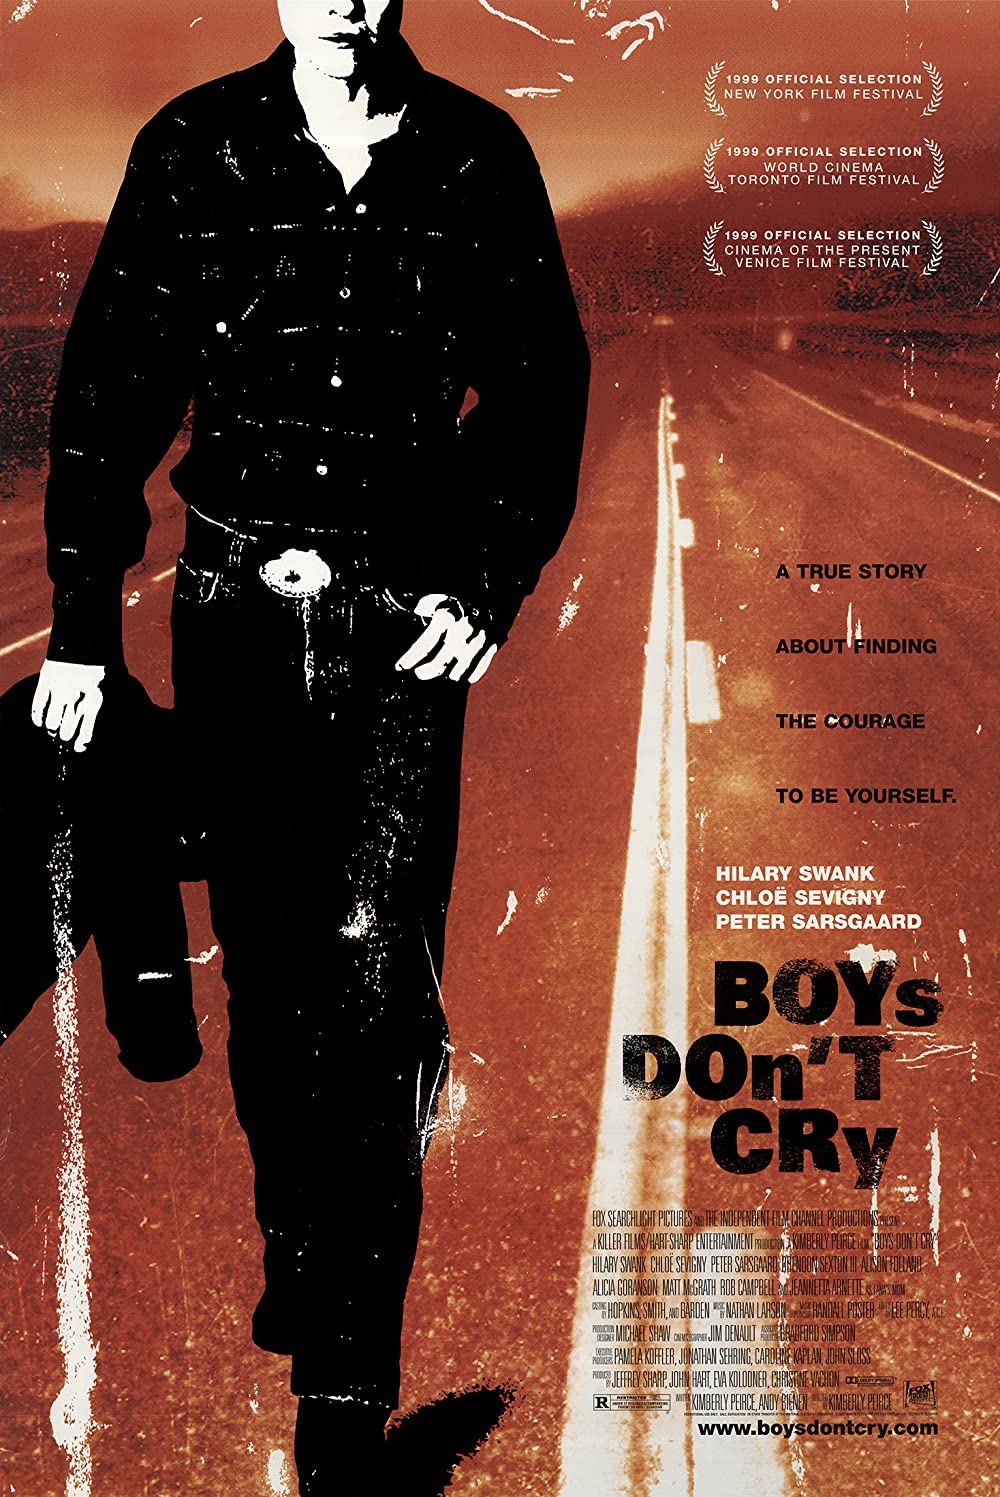 Filmbeschreibung zu Boys Don't Cry